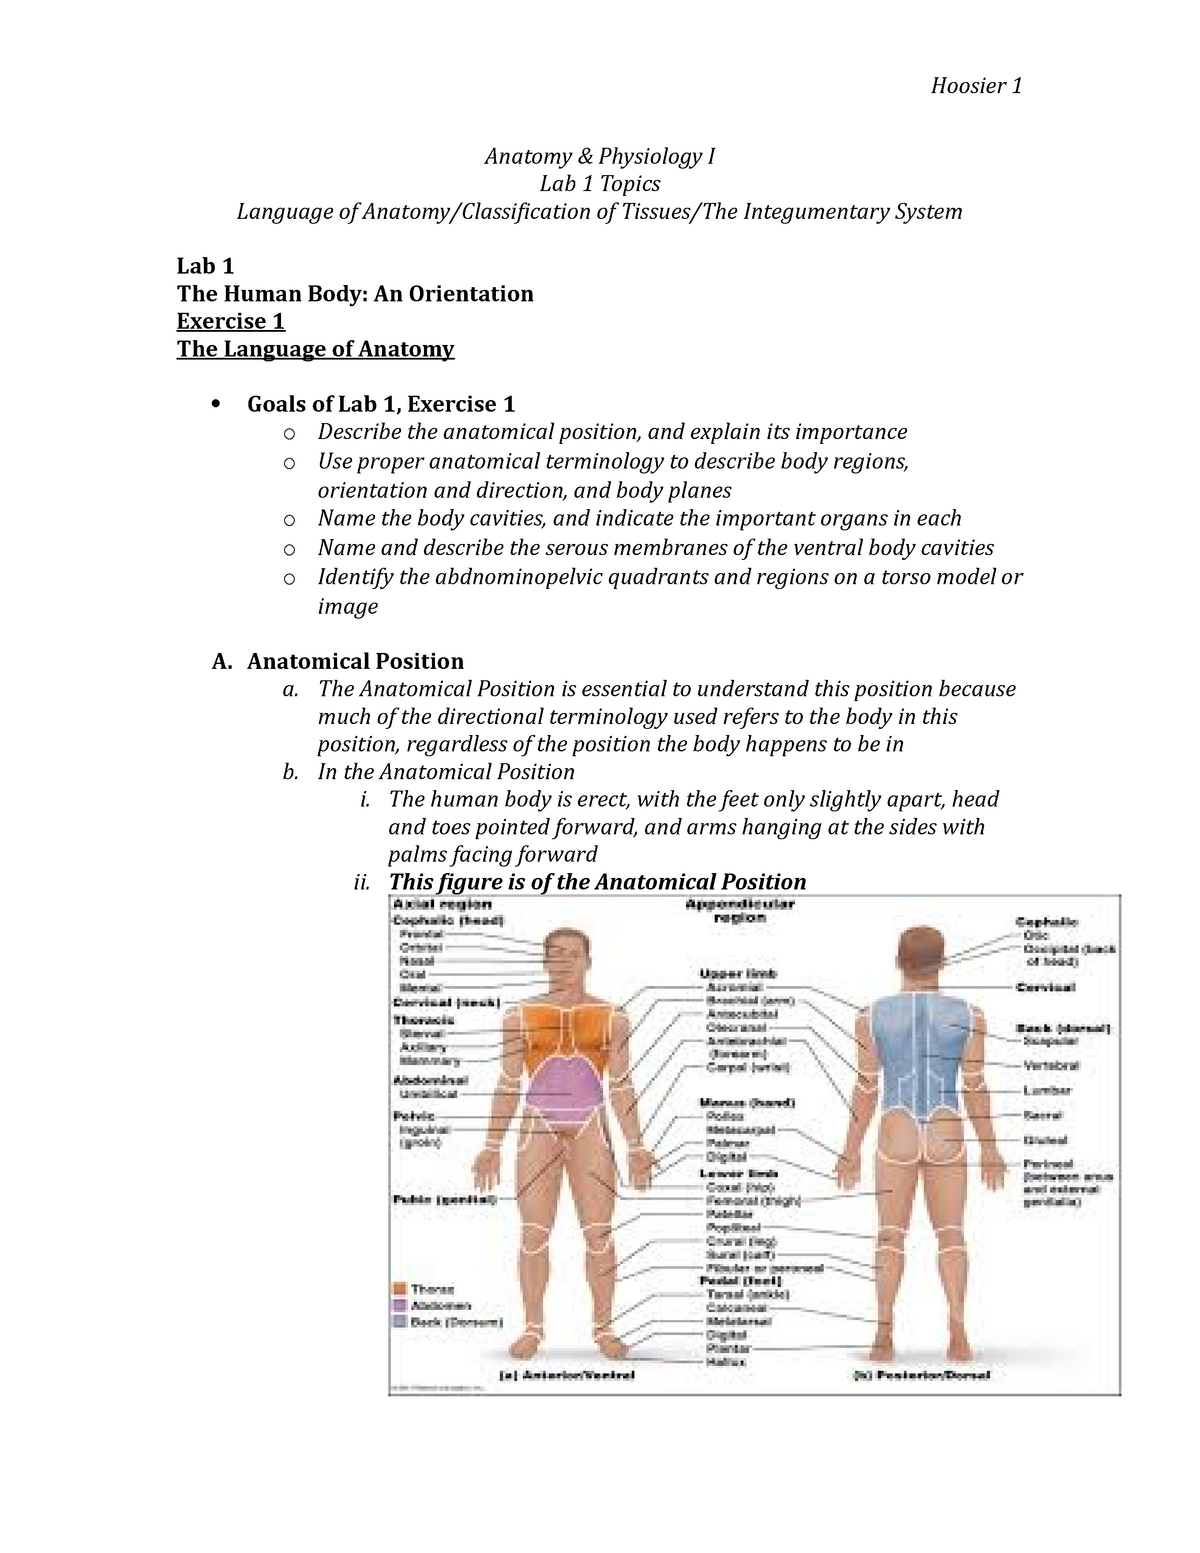 Lab 1 Exercises 123 Anatomy And Physiology I Lab 1 Topics Language Of